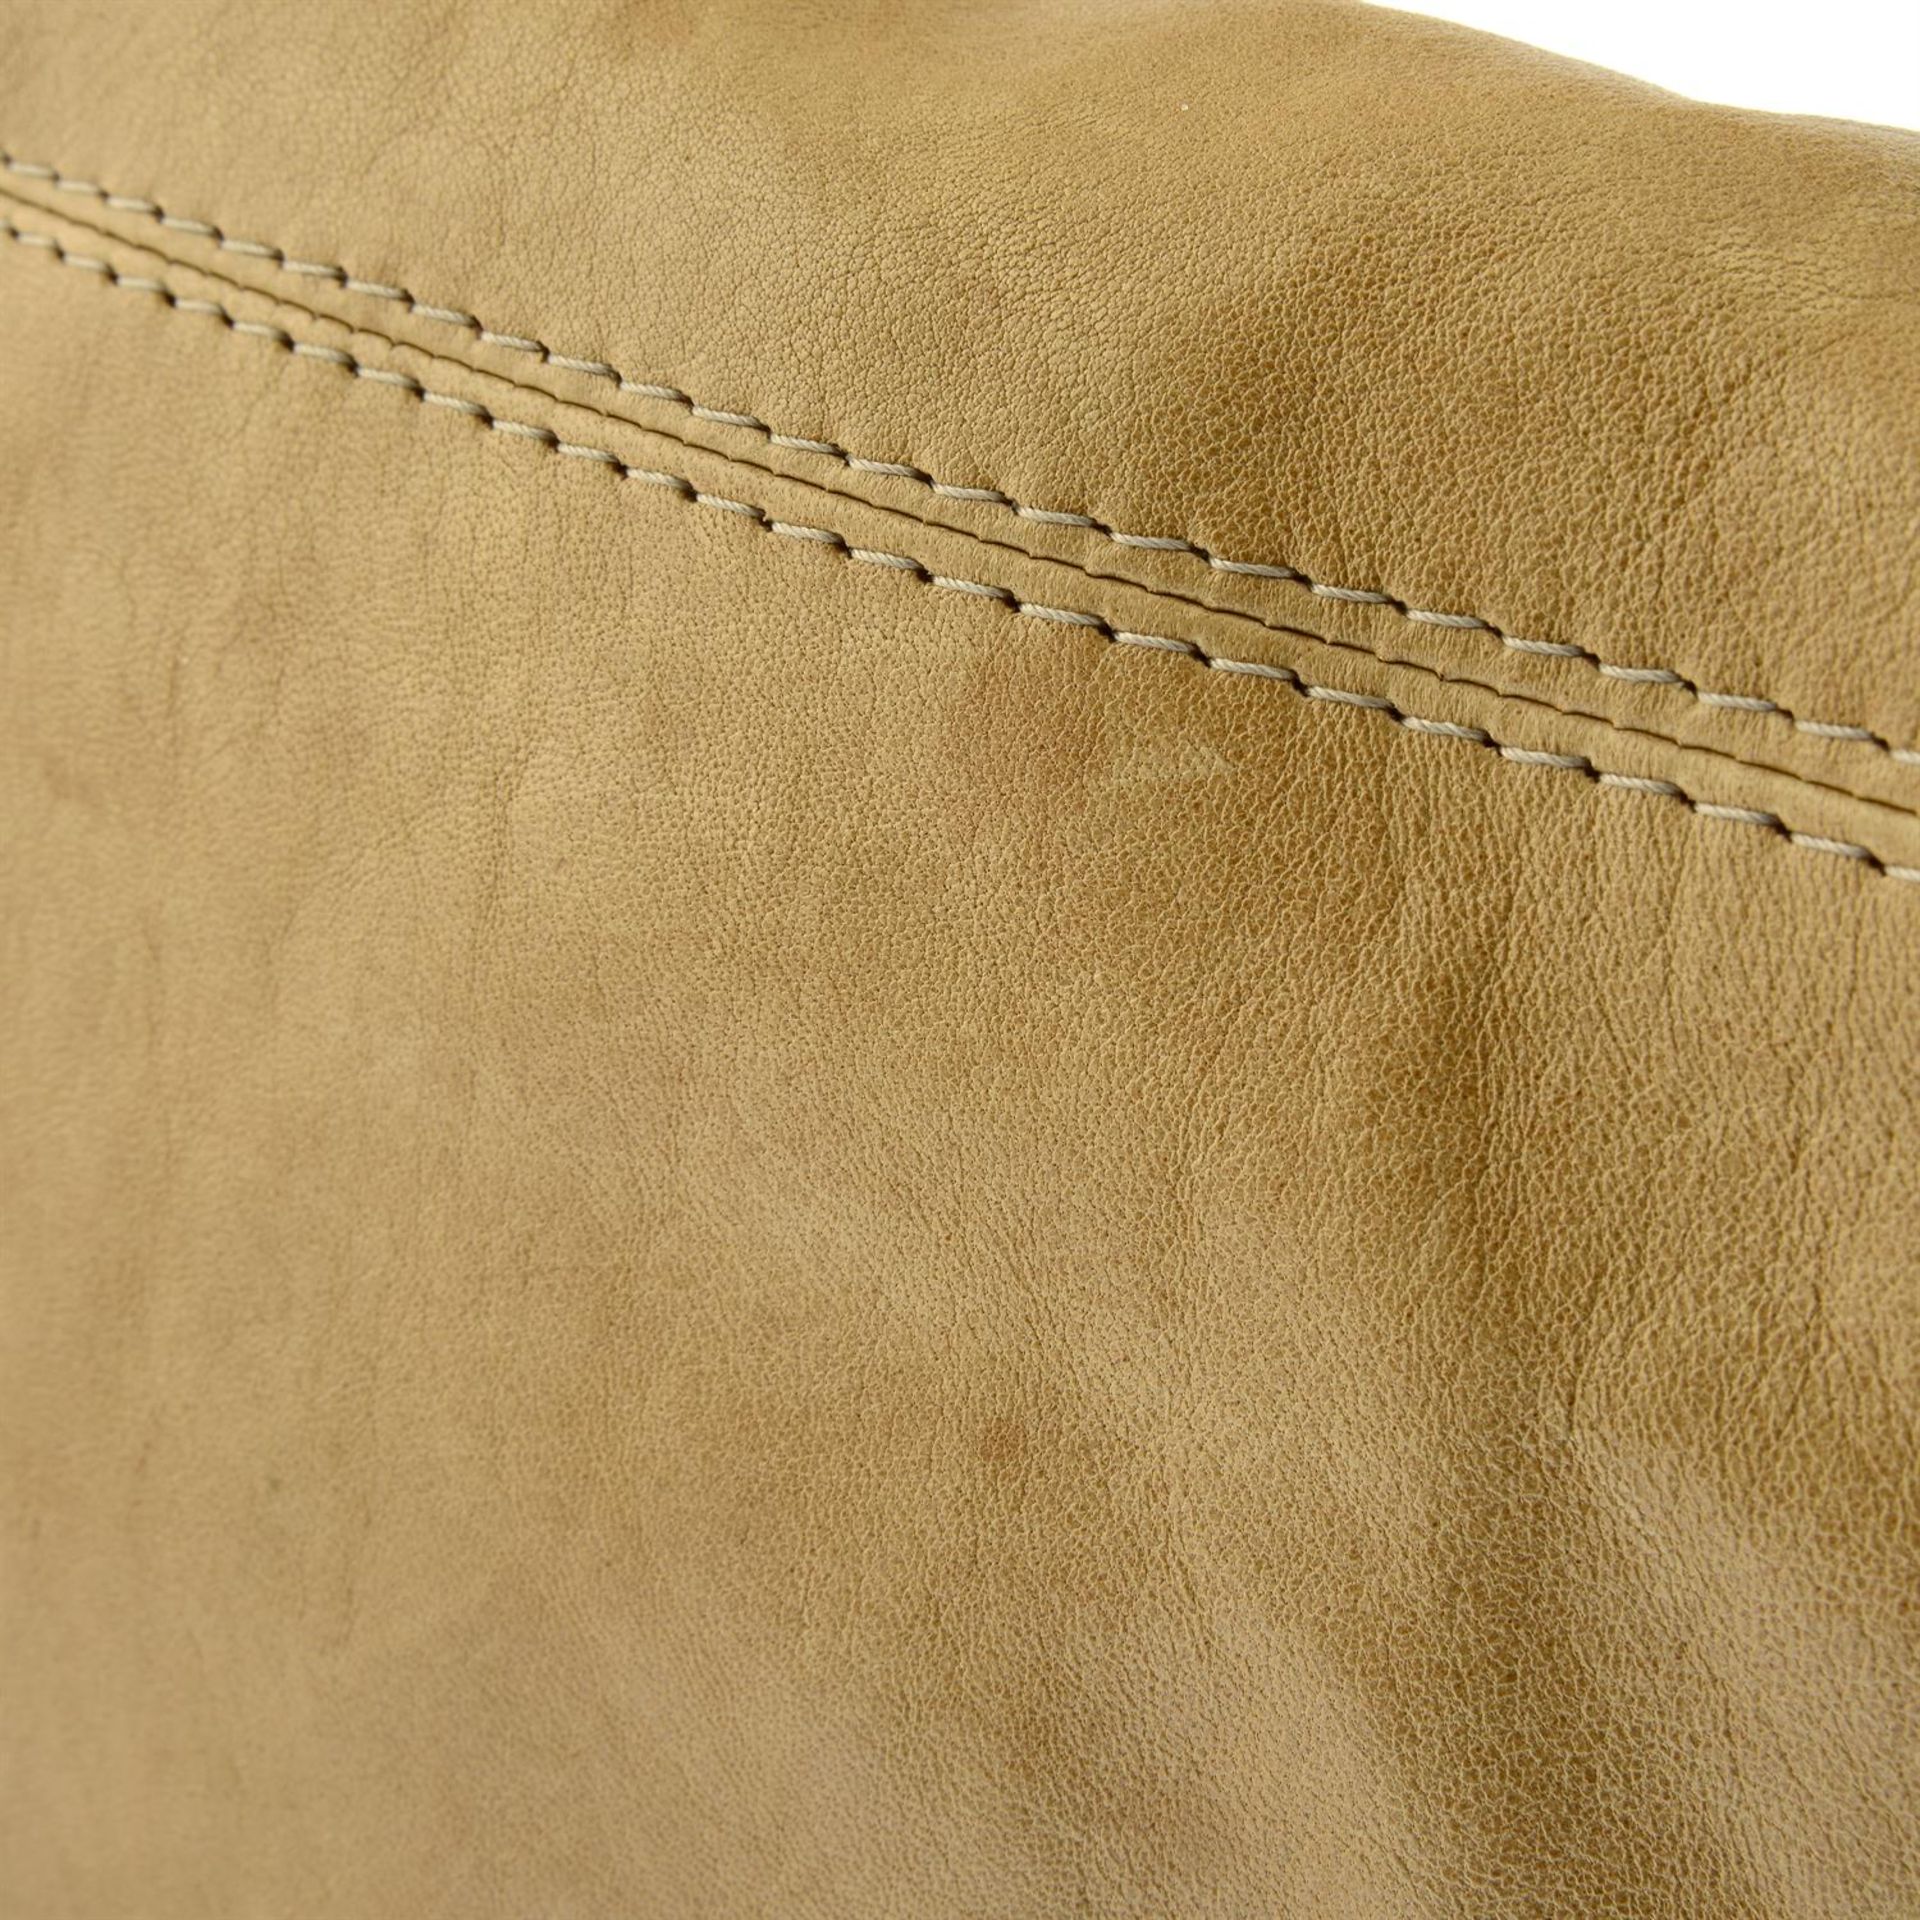 ALEXANDER MCQUEEN - a tan leather Faithfull handbag. - Image 5 of 5